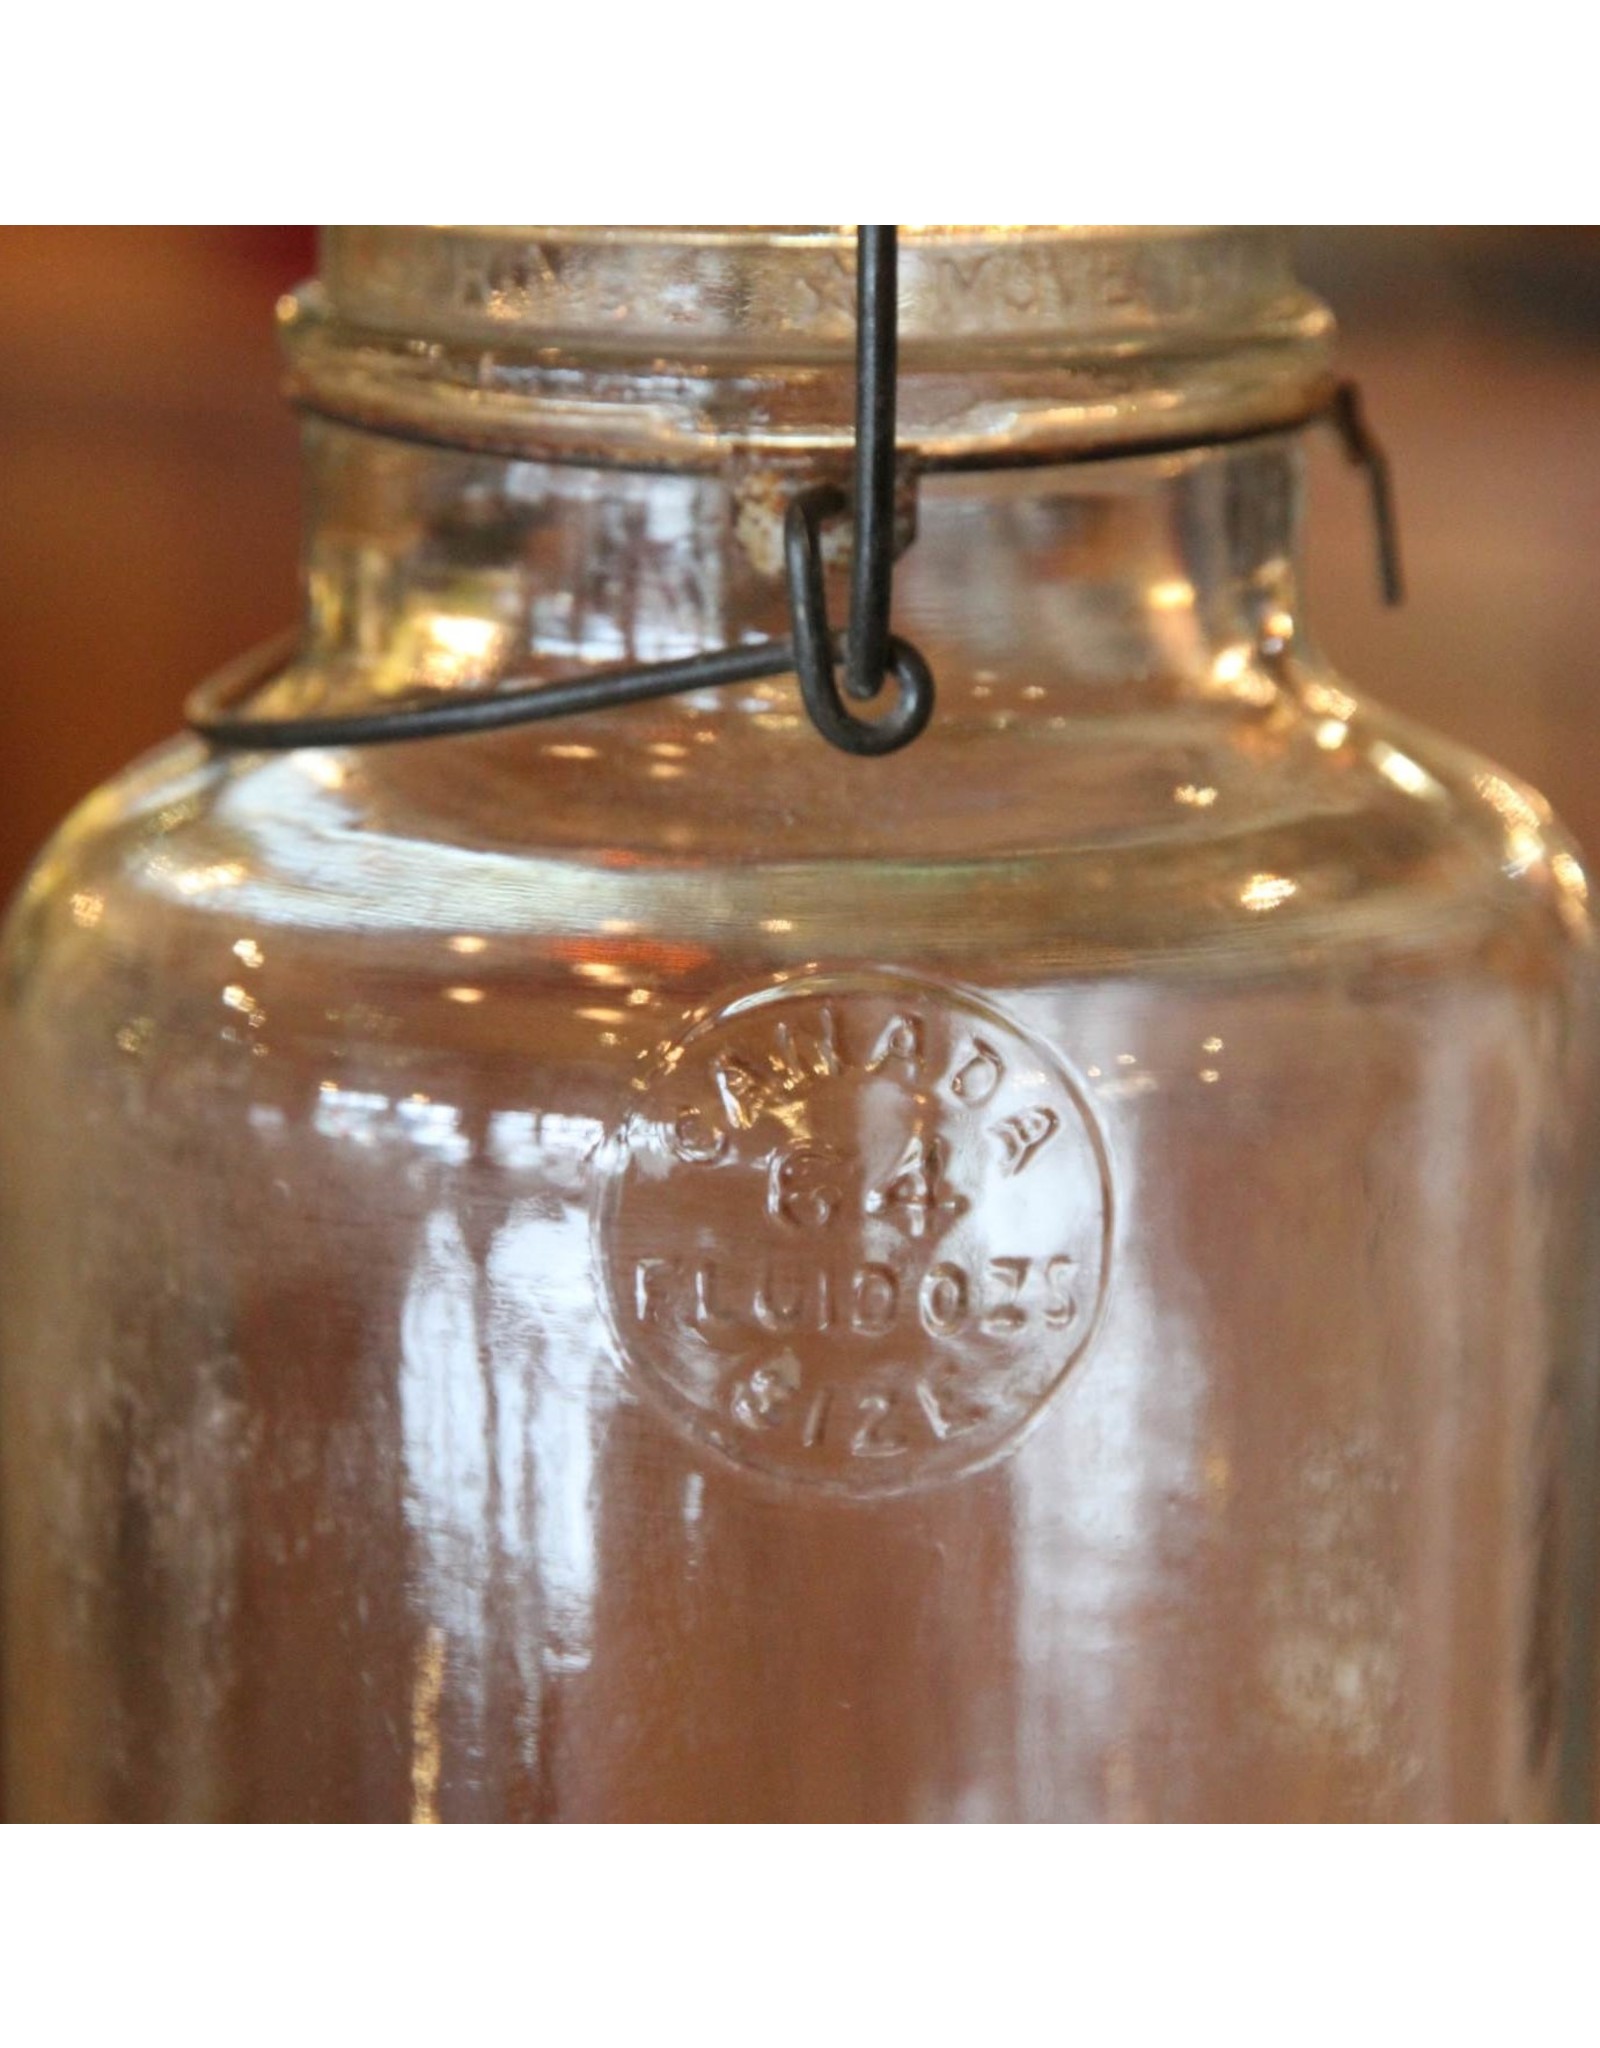 Canning jar - mason jar, 1943, wire bail, clear glass